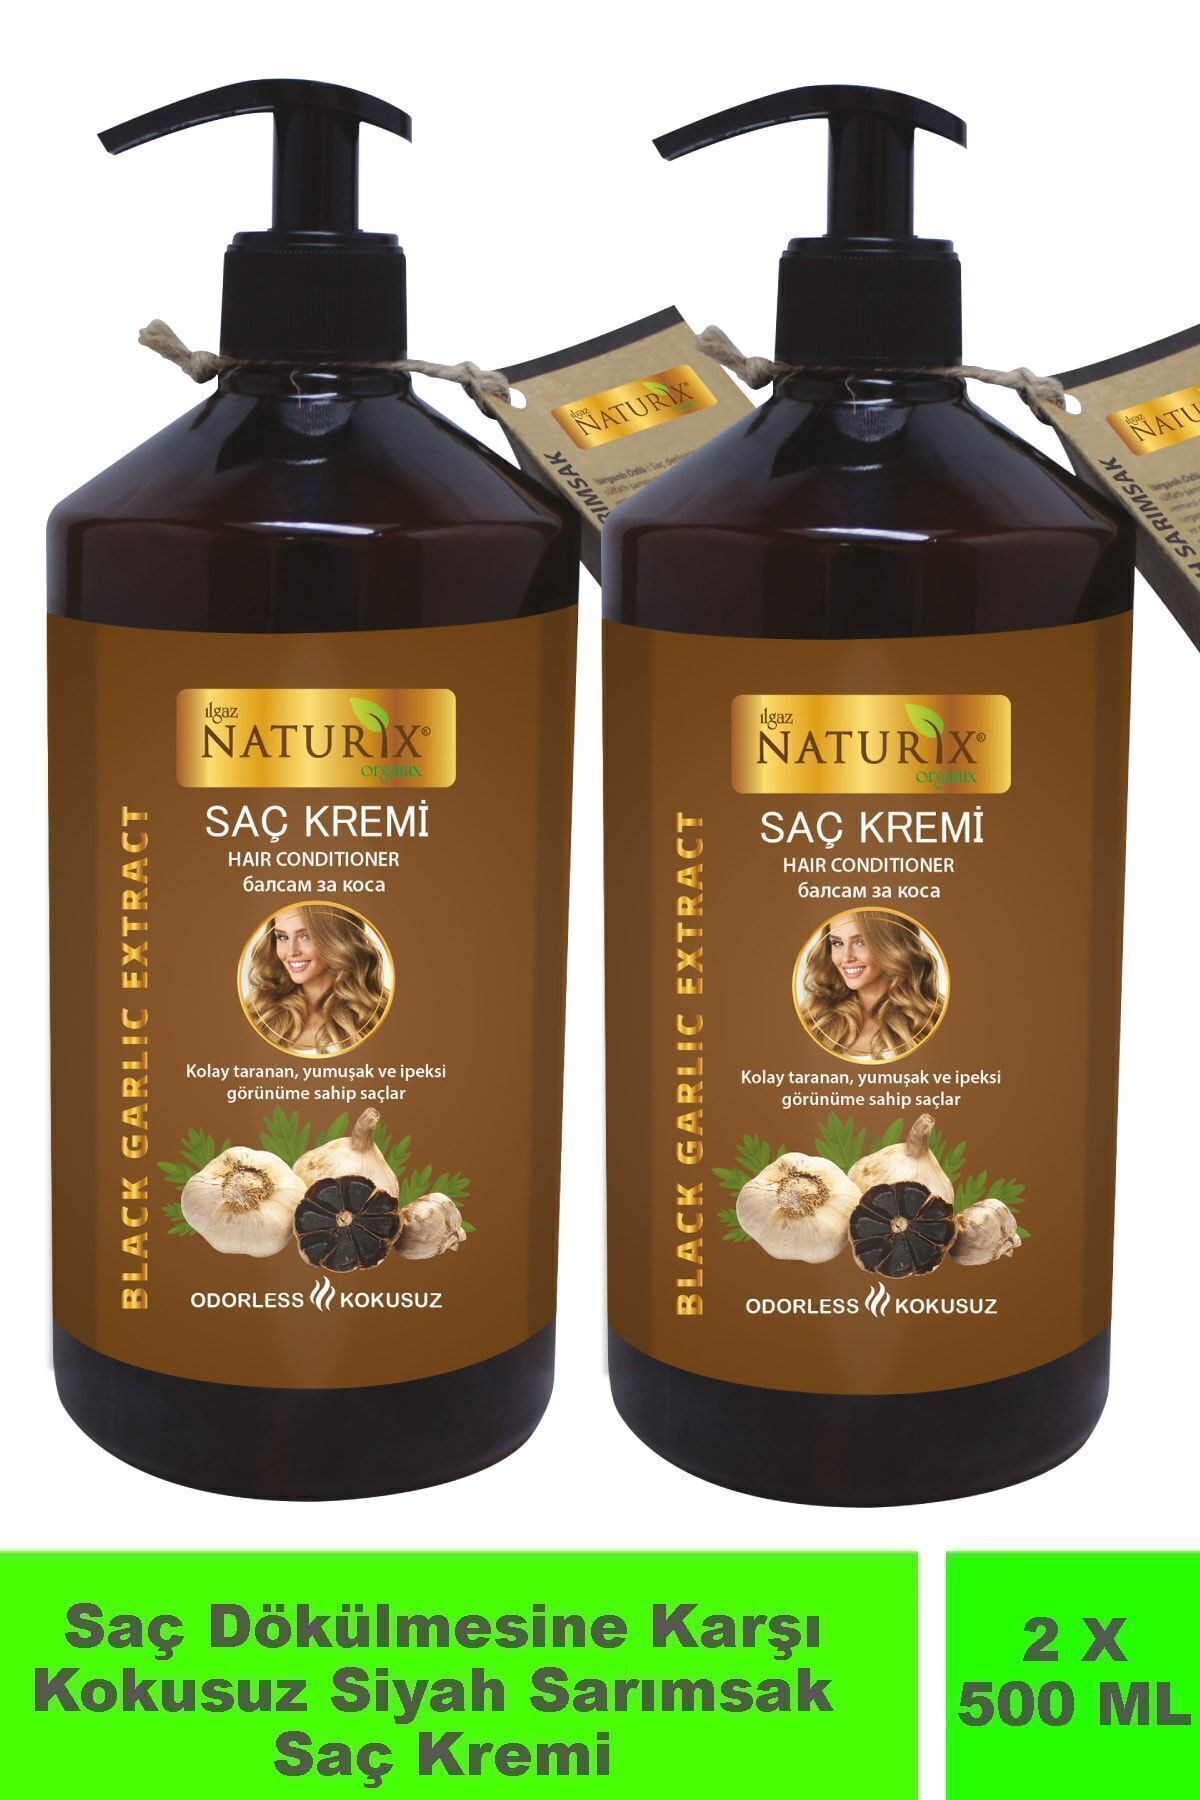 Ilgaz Naturix Organix 2'li Saç Dökülme Karşıtı Doğal Siyah Sarımsak Özlü 500 ml Saç Bakım Kremi Kara Sarımsak Saç Kremi